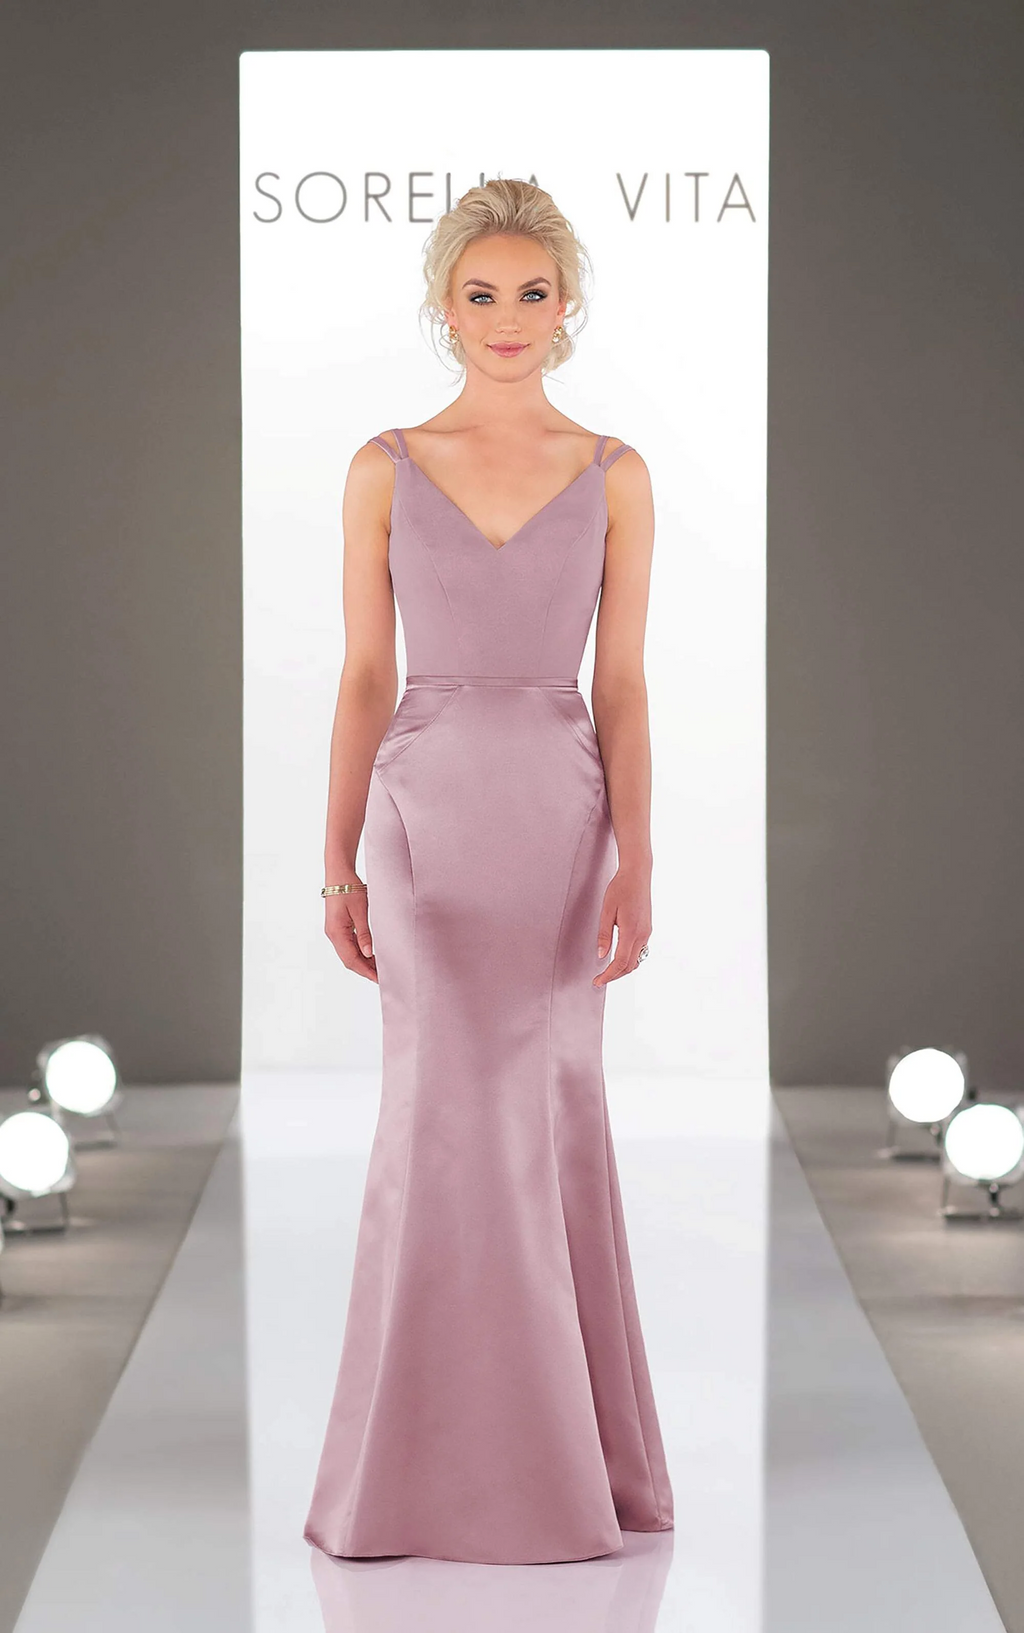 Sorella Vita Dress Style 9206 (Rosewood-Size 14) Prom, Ball., Black-tie, Bridesmaid, Pageant